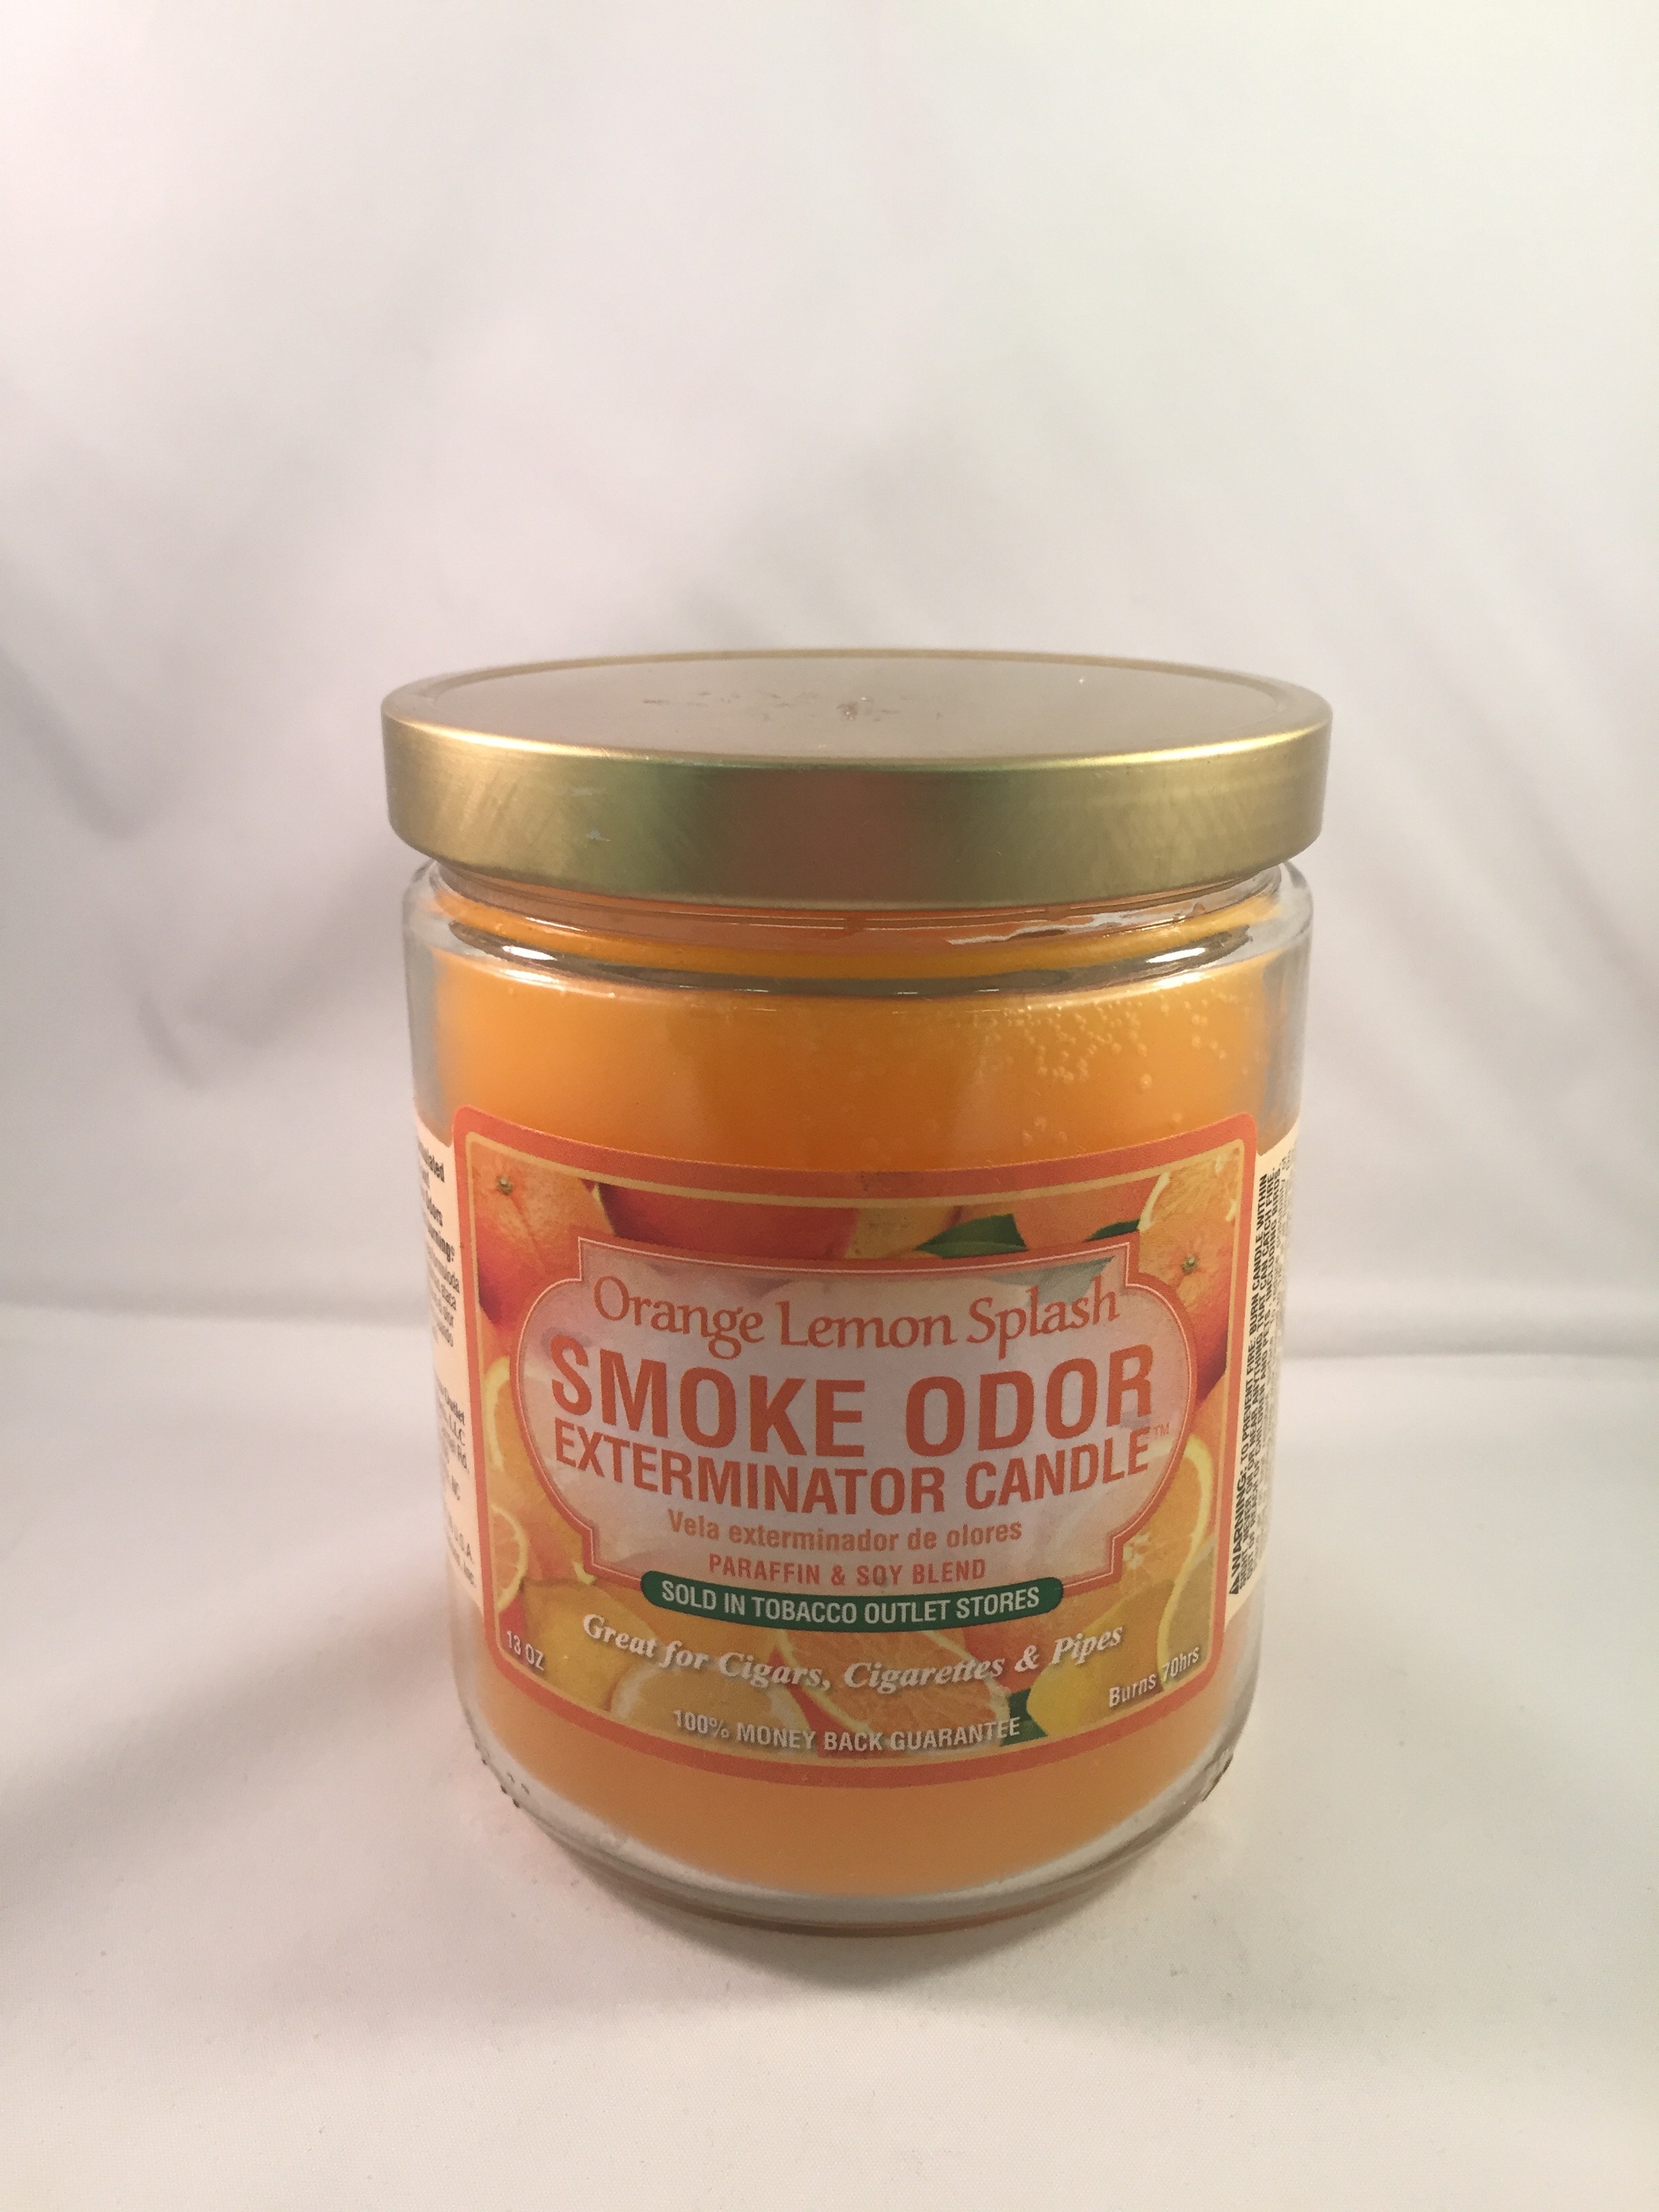 Smoke Odor Exterminator Candle - Orange Lemon Splash